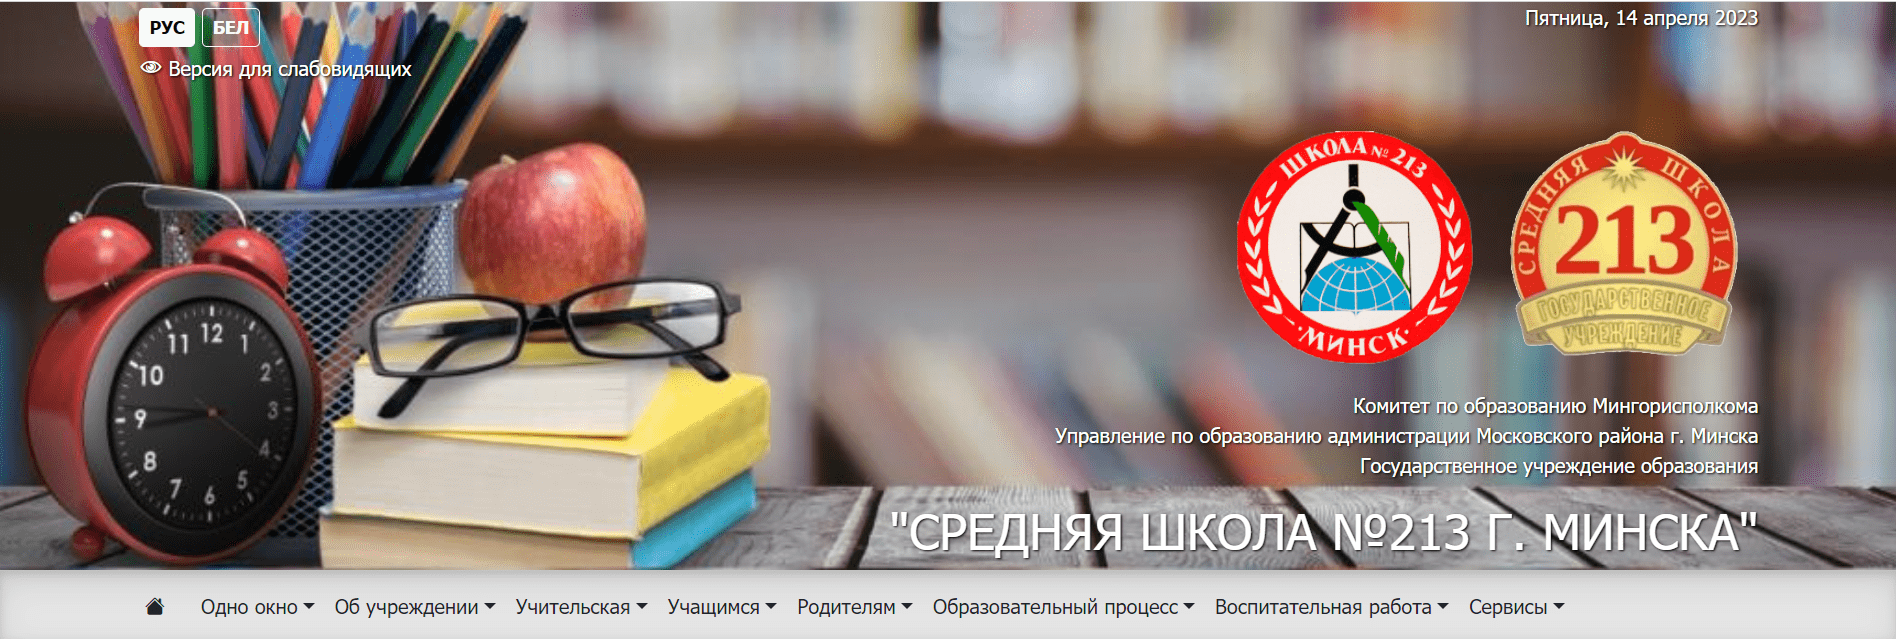 Средняя школа №213 г. Минска (sch213.minsk.edu.by)